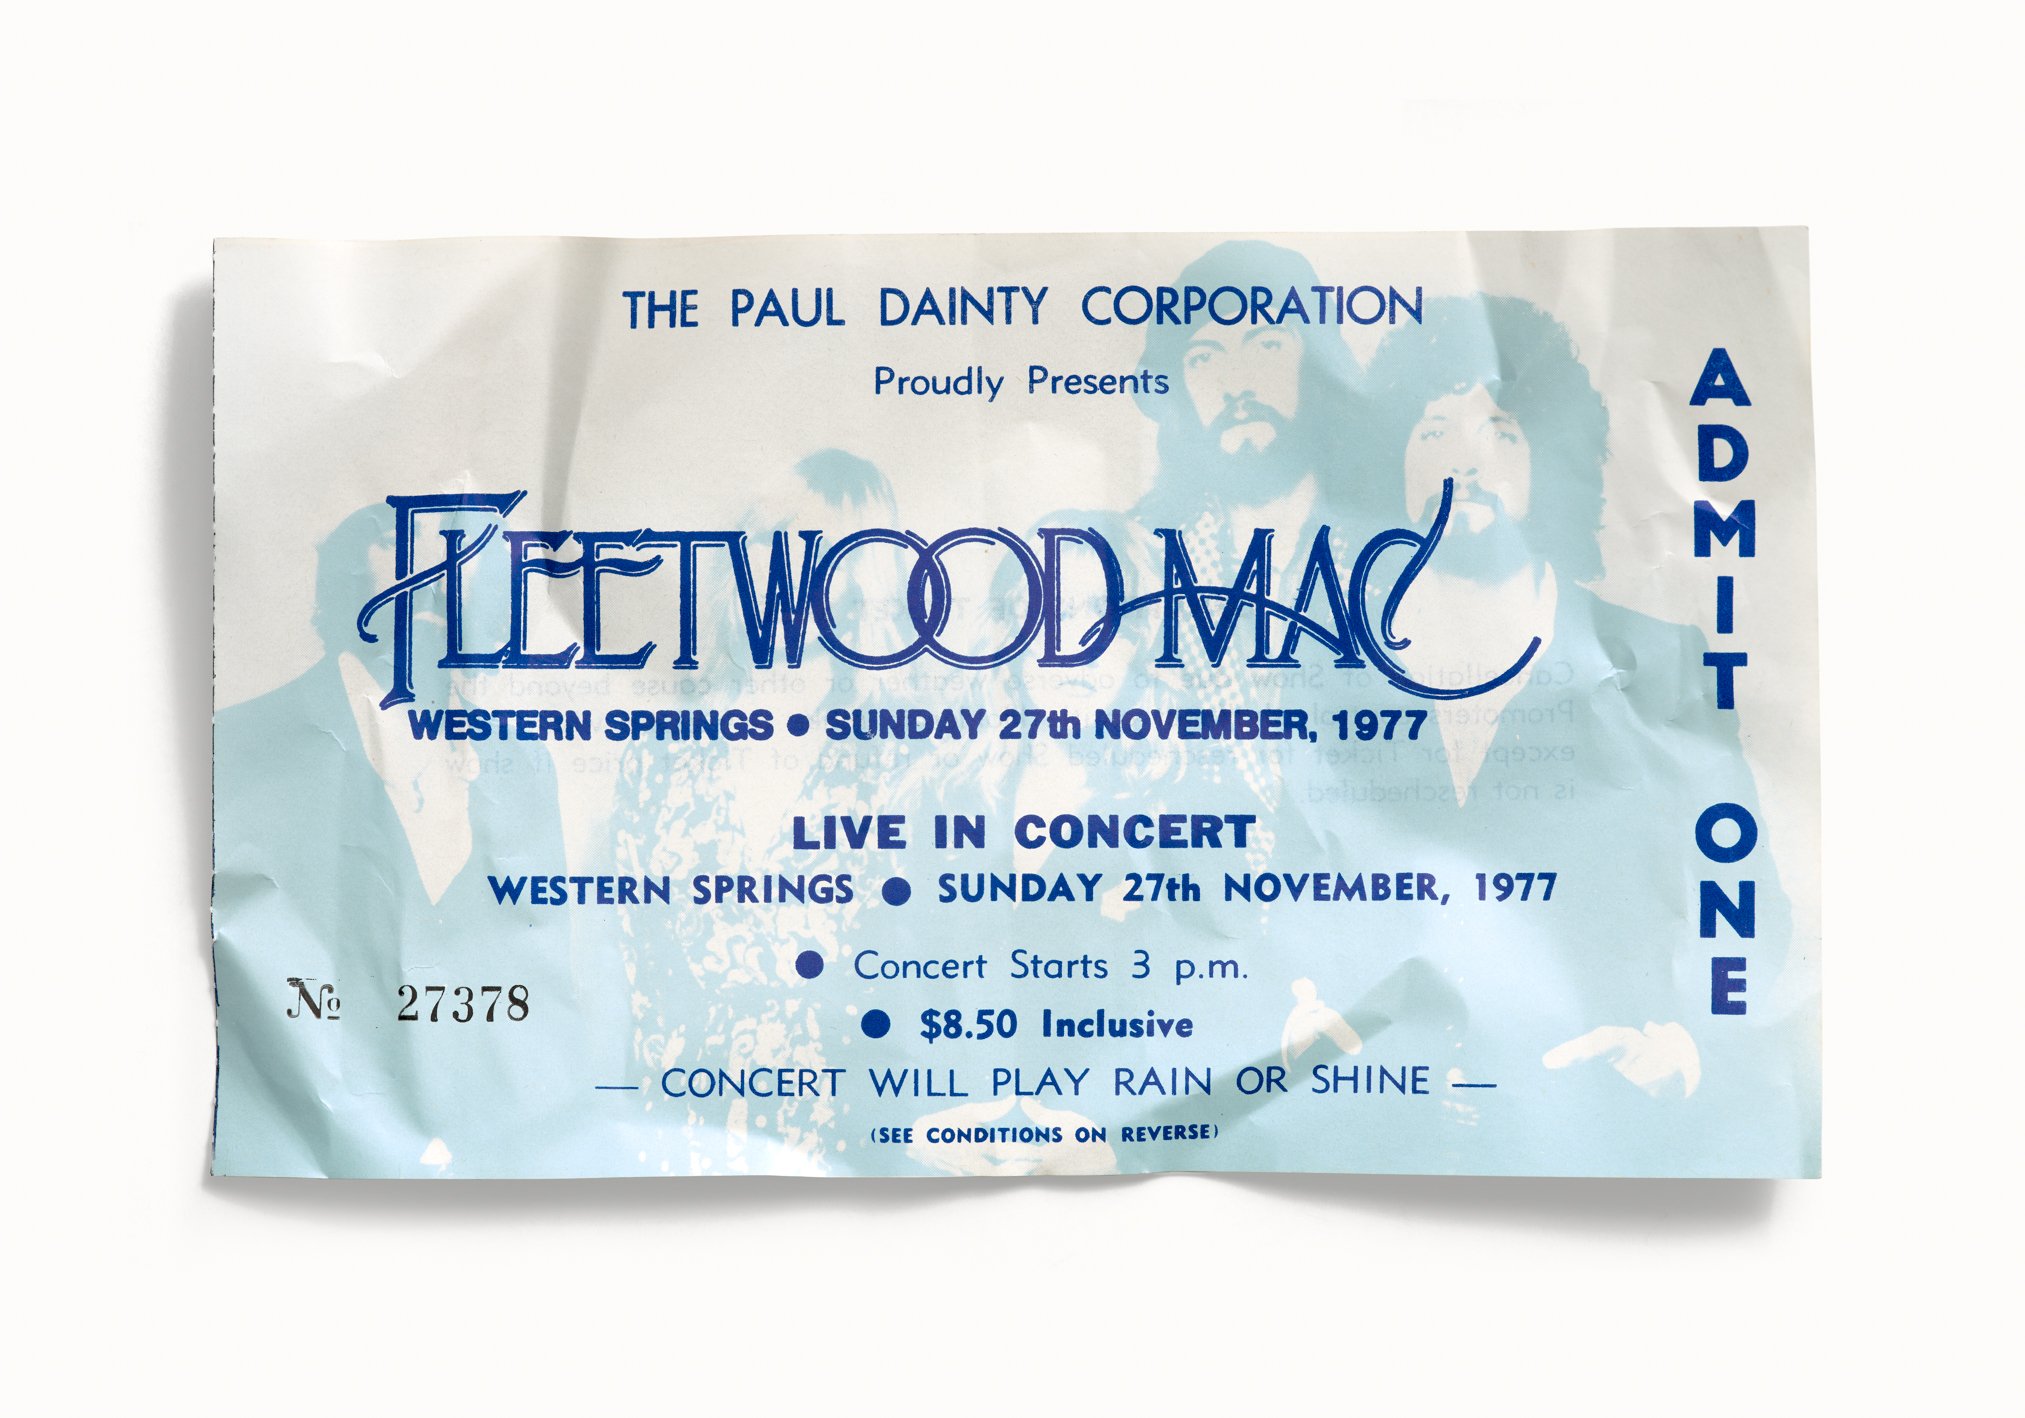 Fleetwood Mac, Western Springs, New Zealand 1977